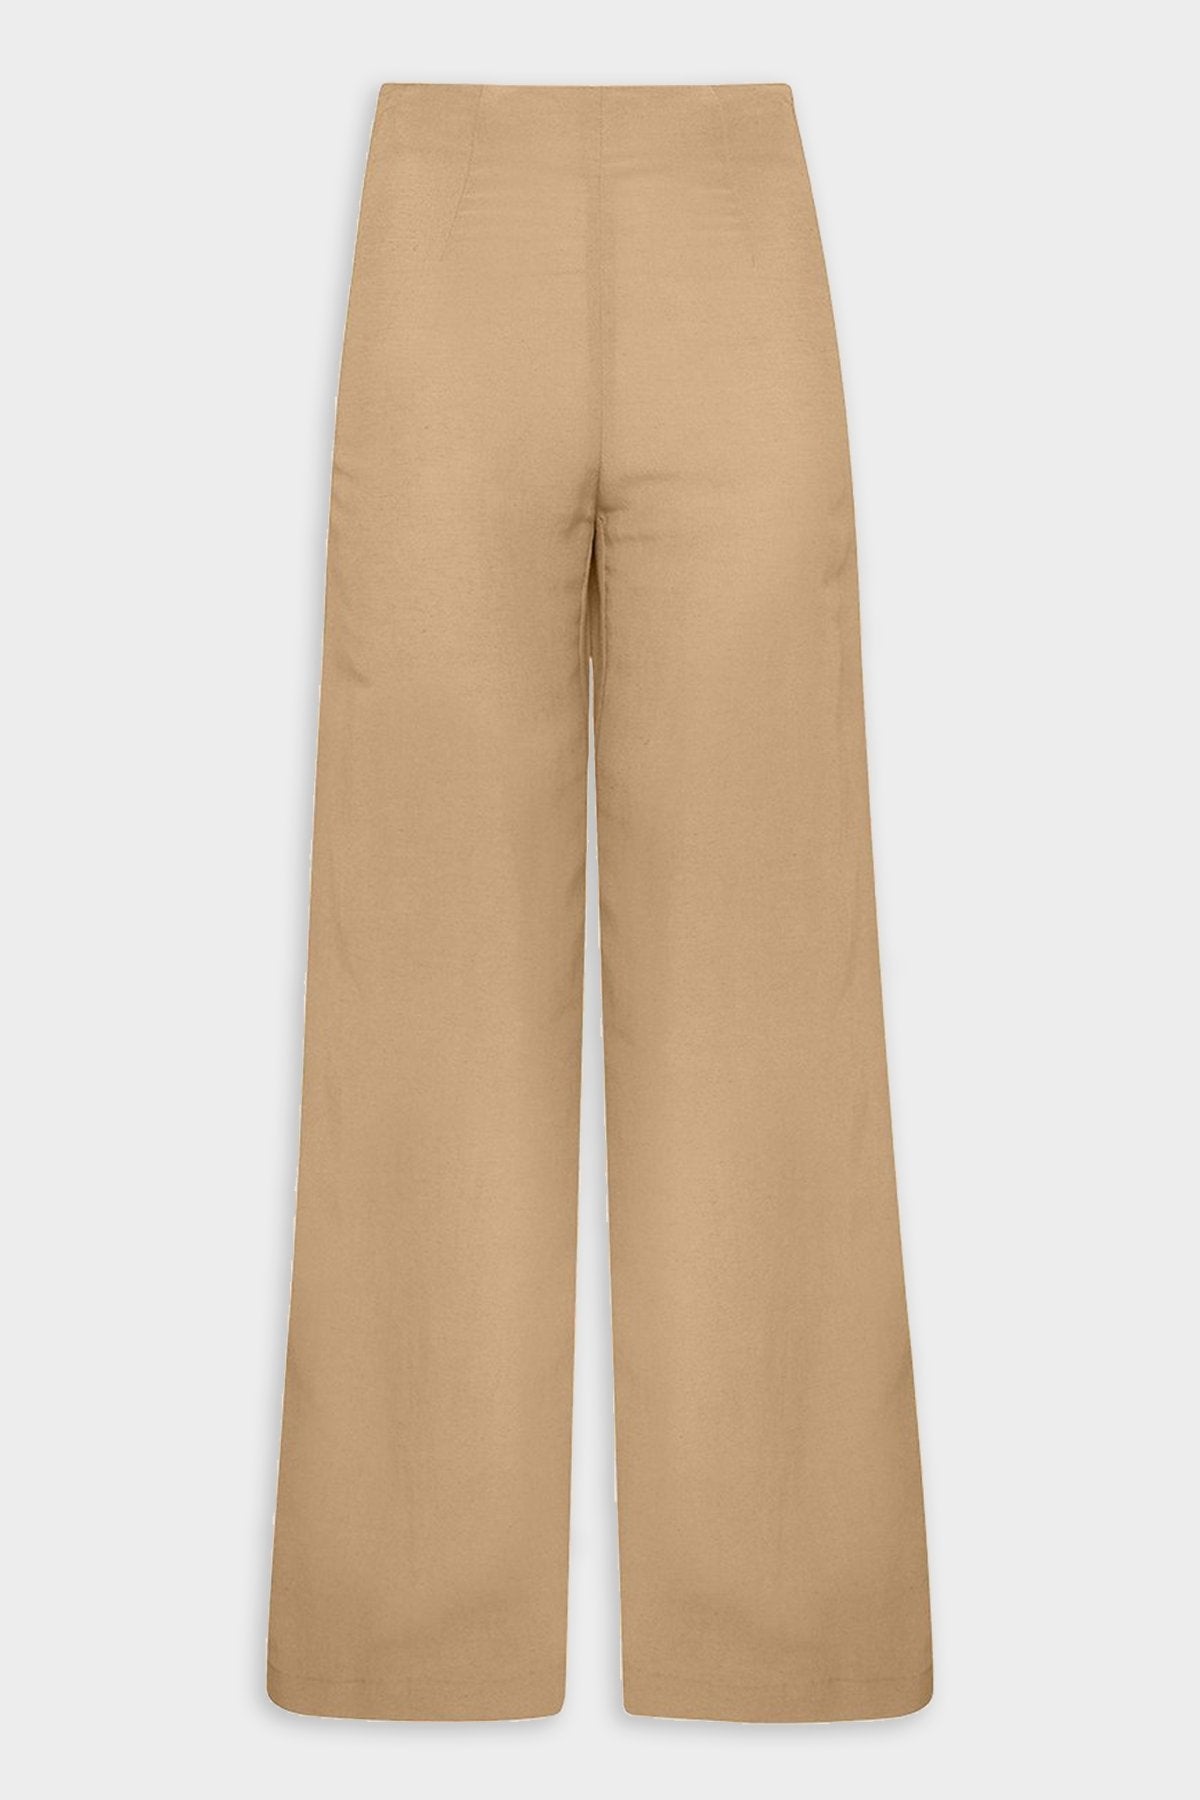 Amo Trousers in Wheat - shop-olivia.com